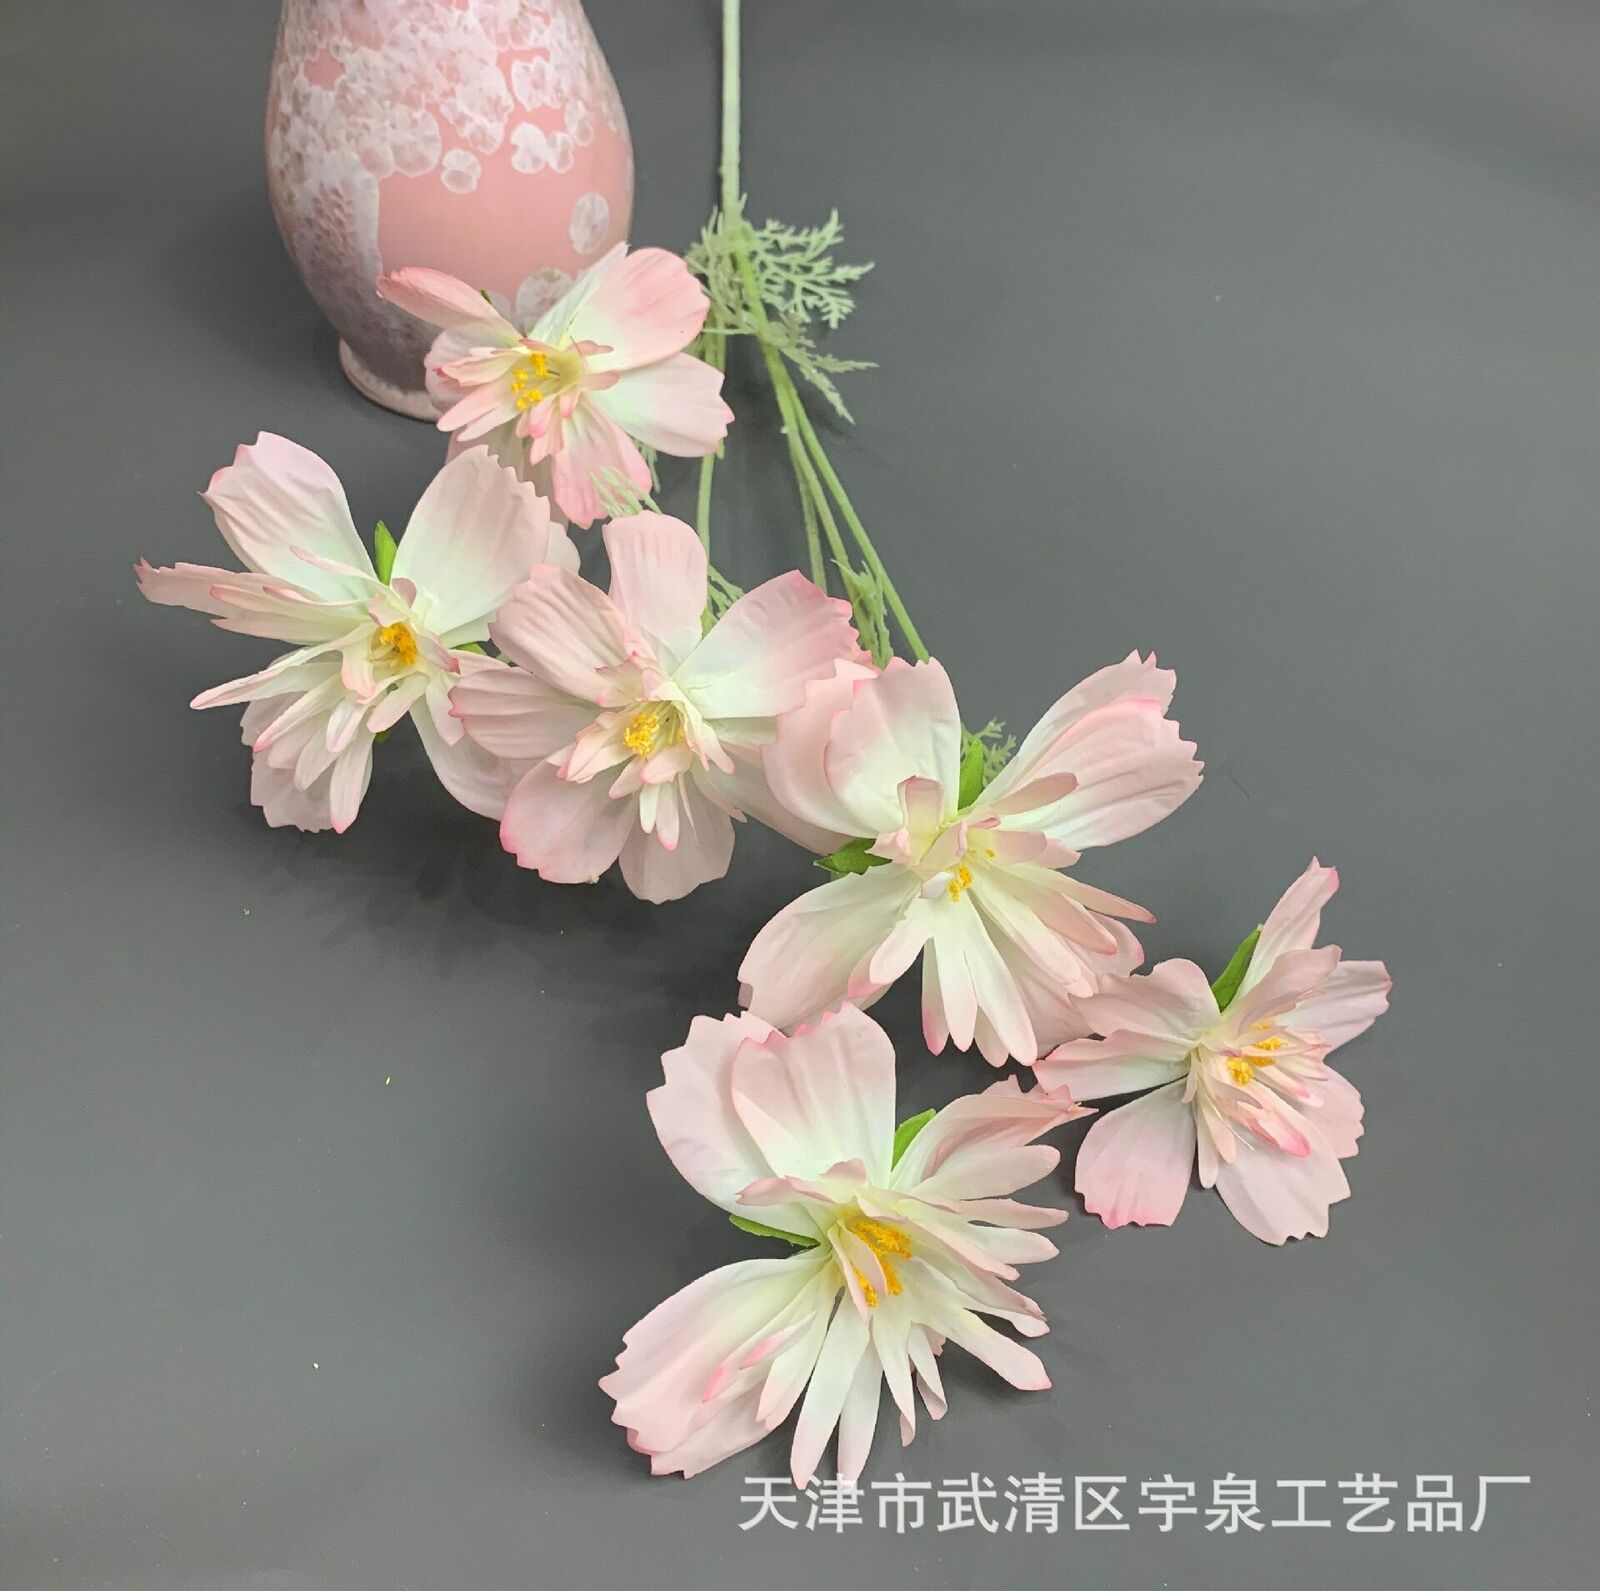 6 Artificial Silk Flower Forks Cherry Happy Flower Room Display Wedding Decorati